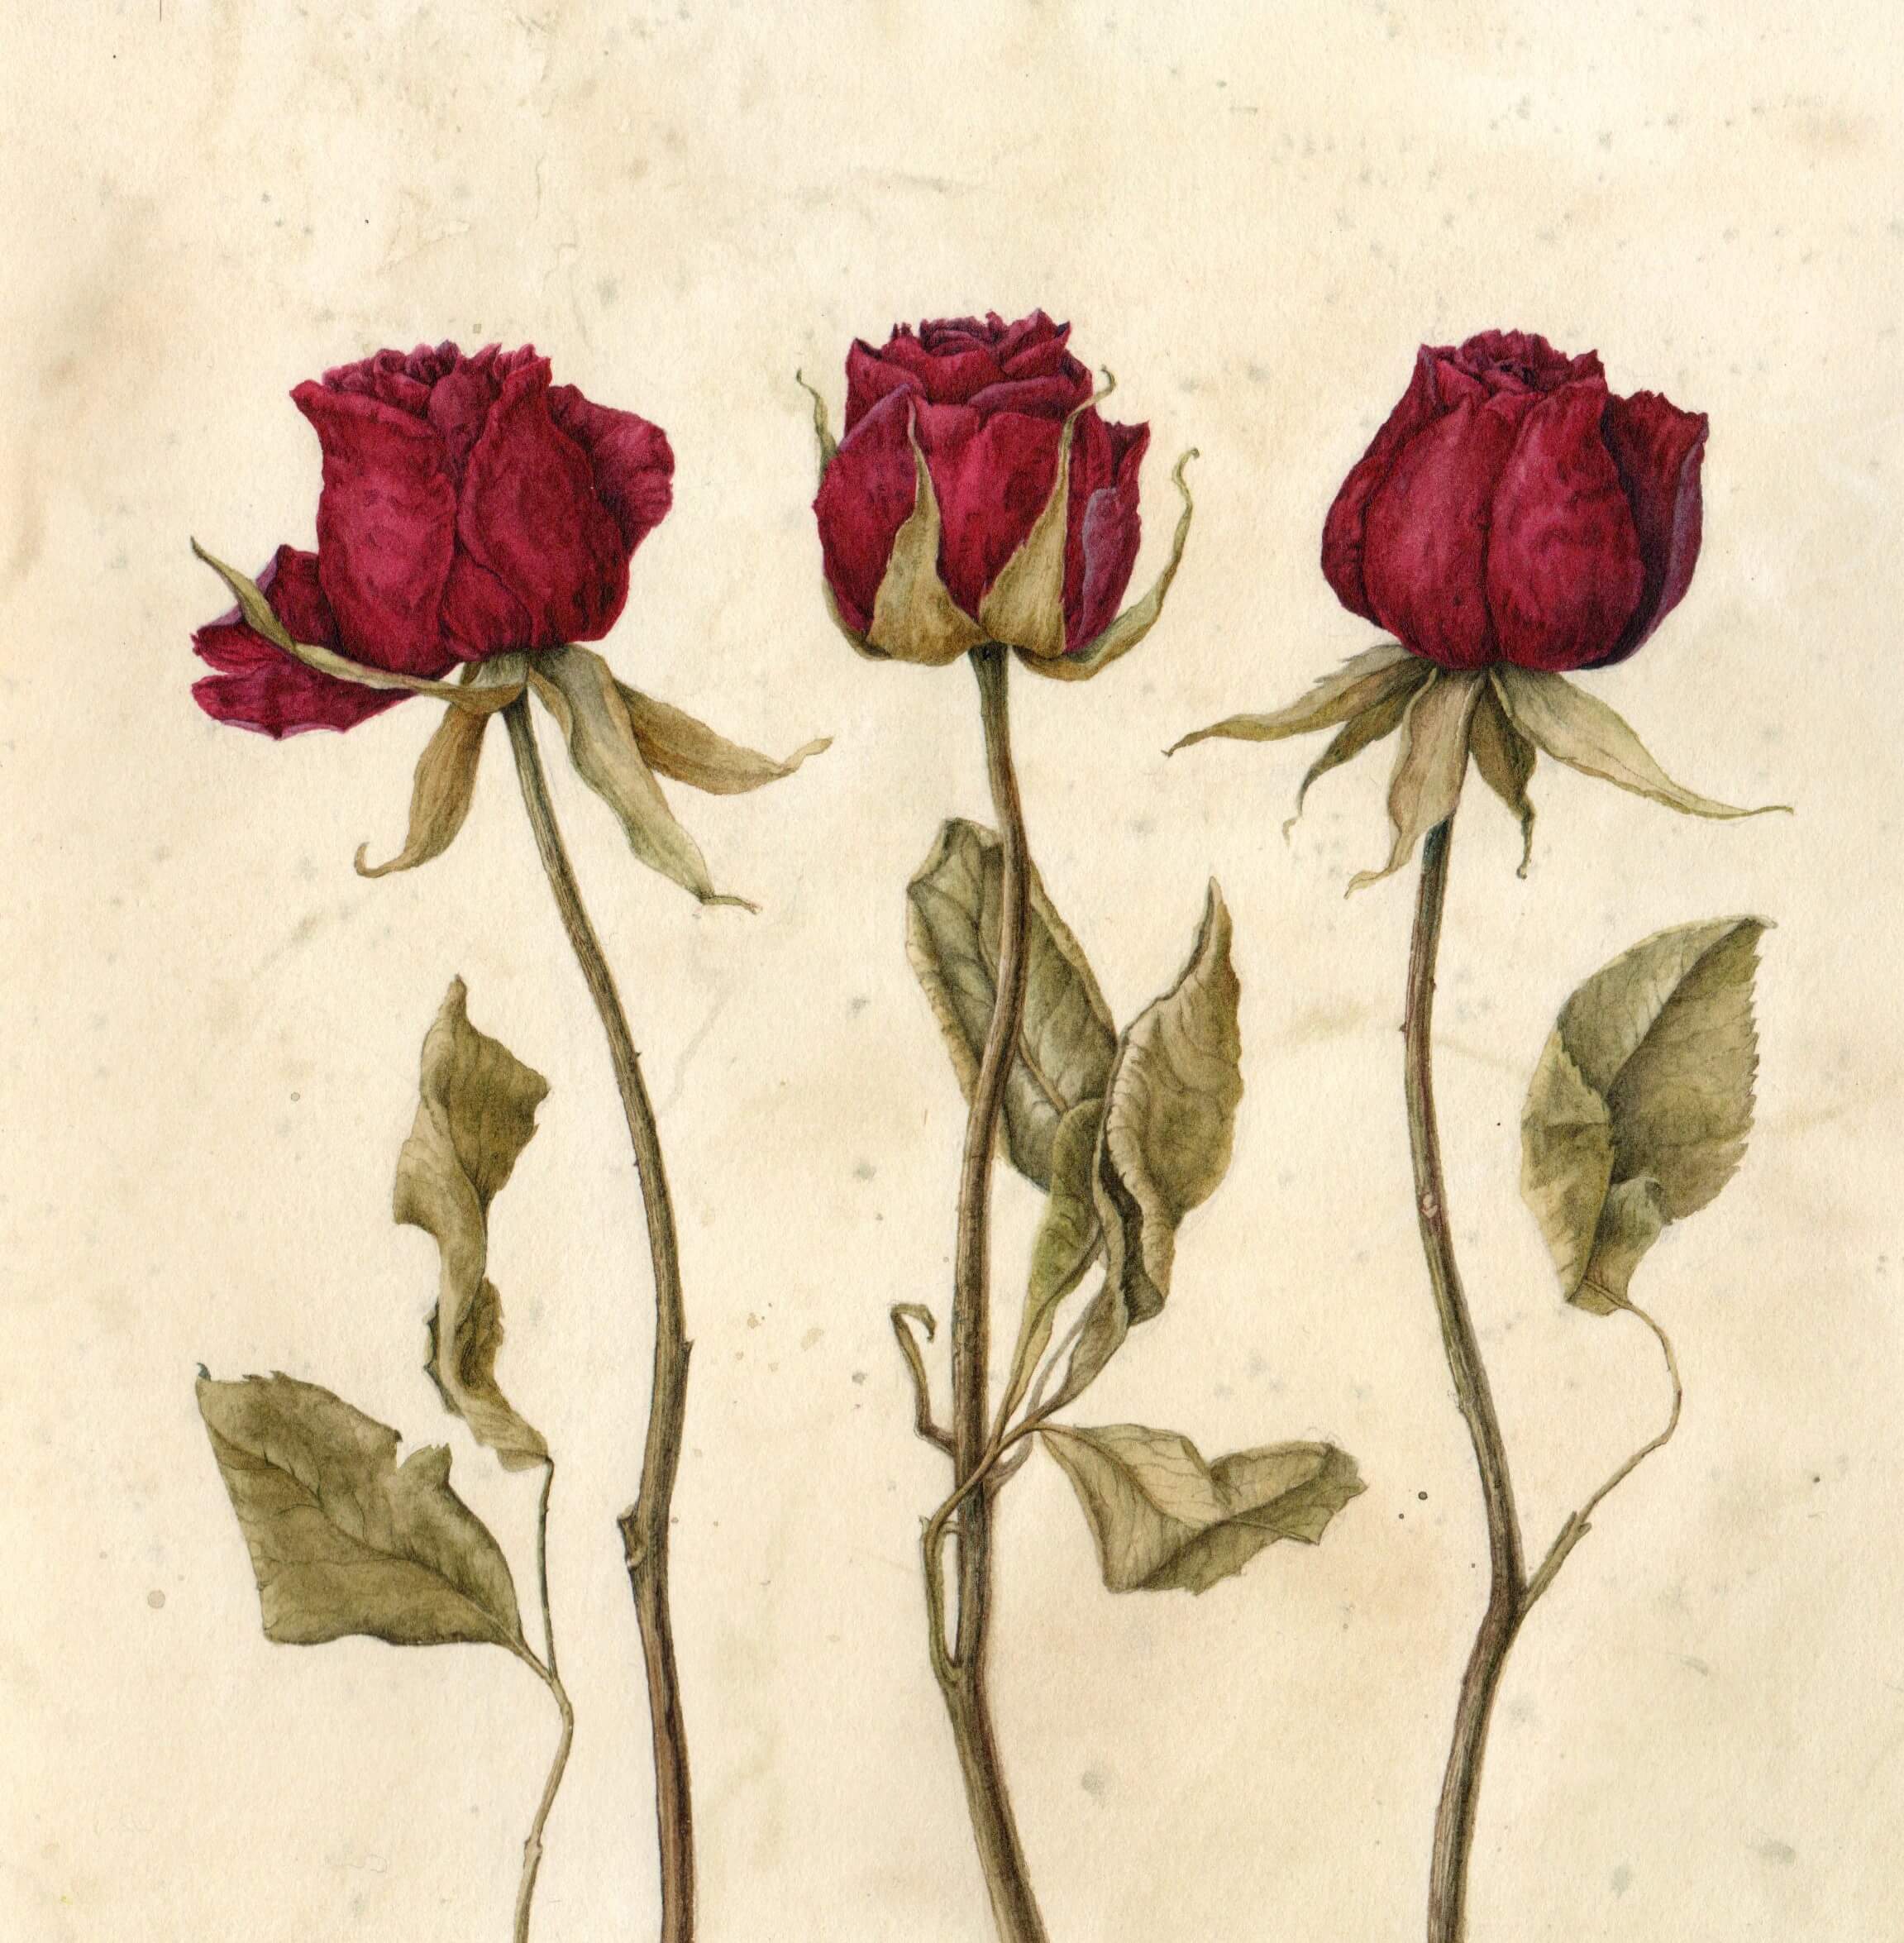 Vintage Roses by Artist Julia Trickey tutor Atelier Clos Mirabel France.